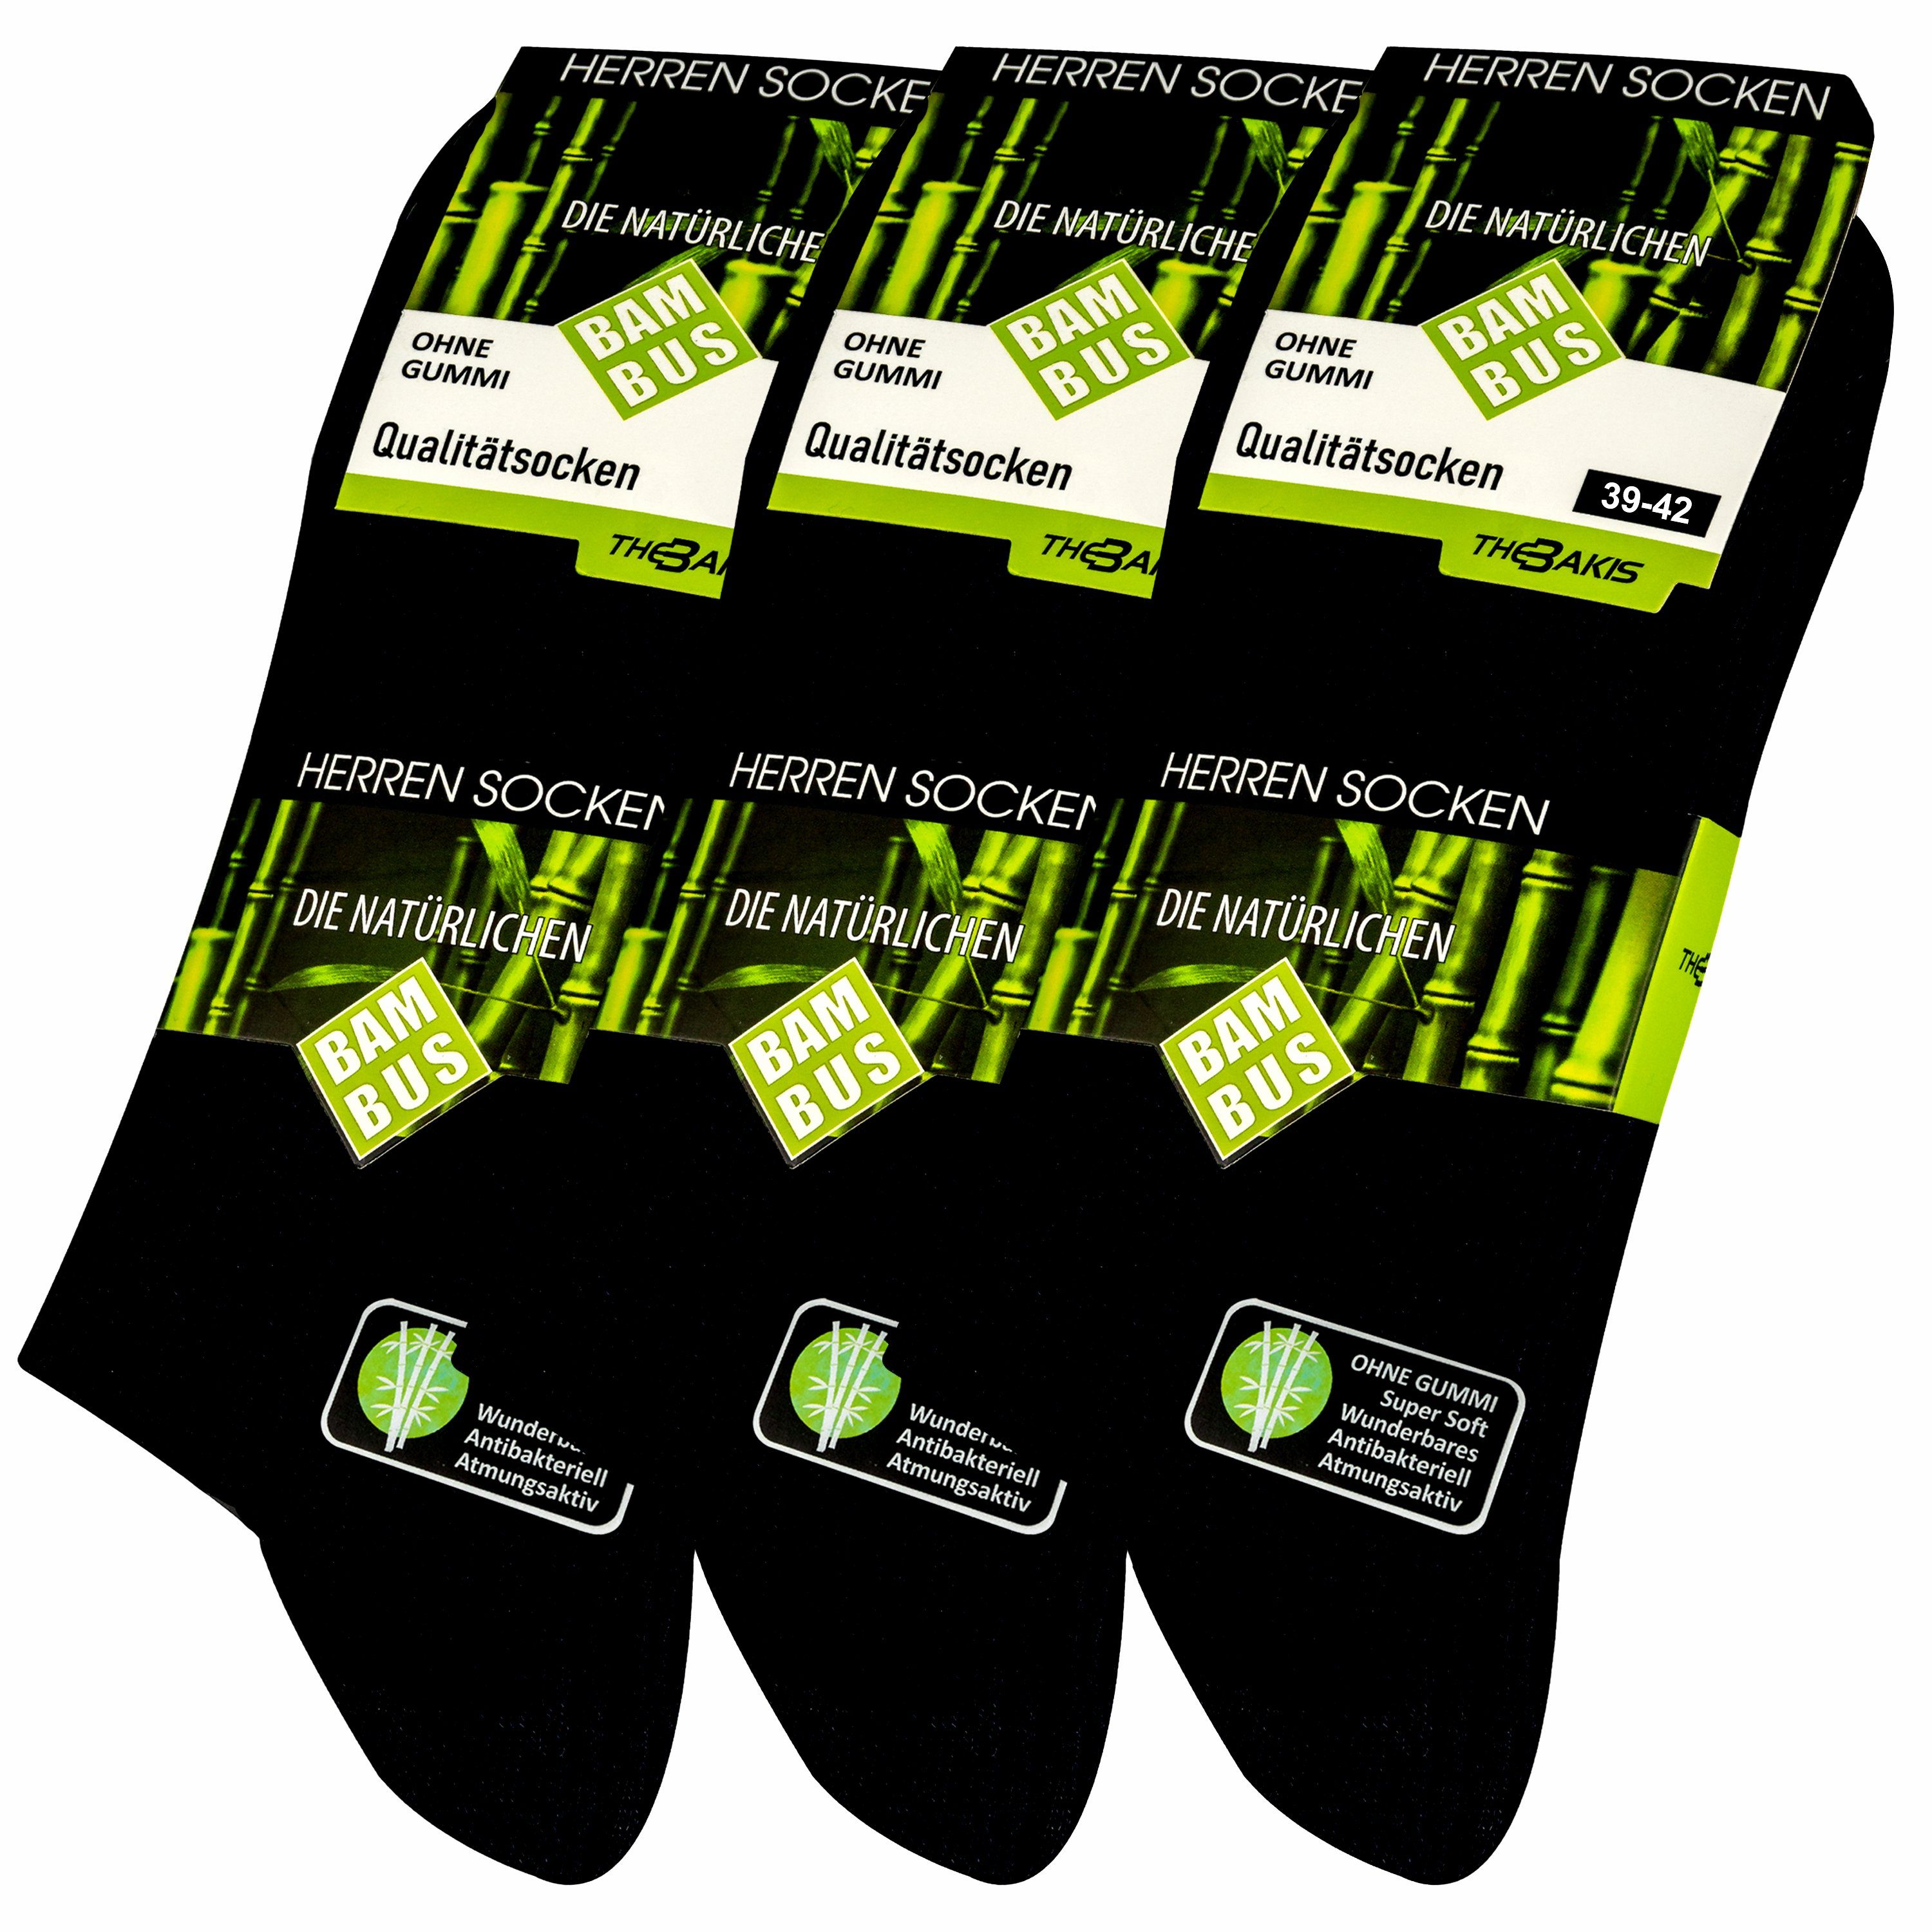 TEXEMP Gesundheitssocken 3 oder 6 Paar Diabetiker Socken ohne Gummi Damen Herren Socken ohne Naht Mehrfarbig Gesundheitssocken (Packung, 3-Paar, 3 oder 6 Paar) Schwarz | Socken